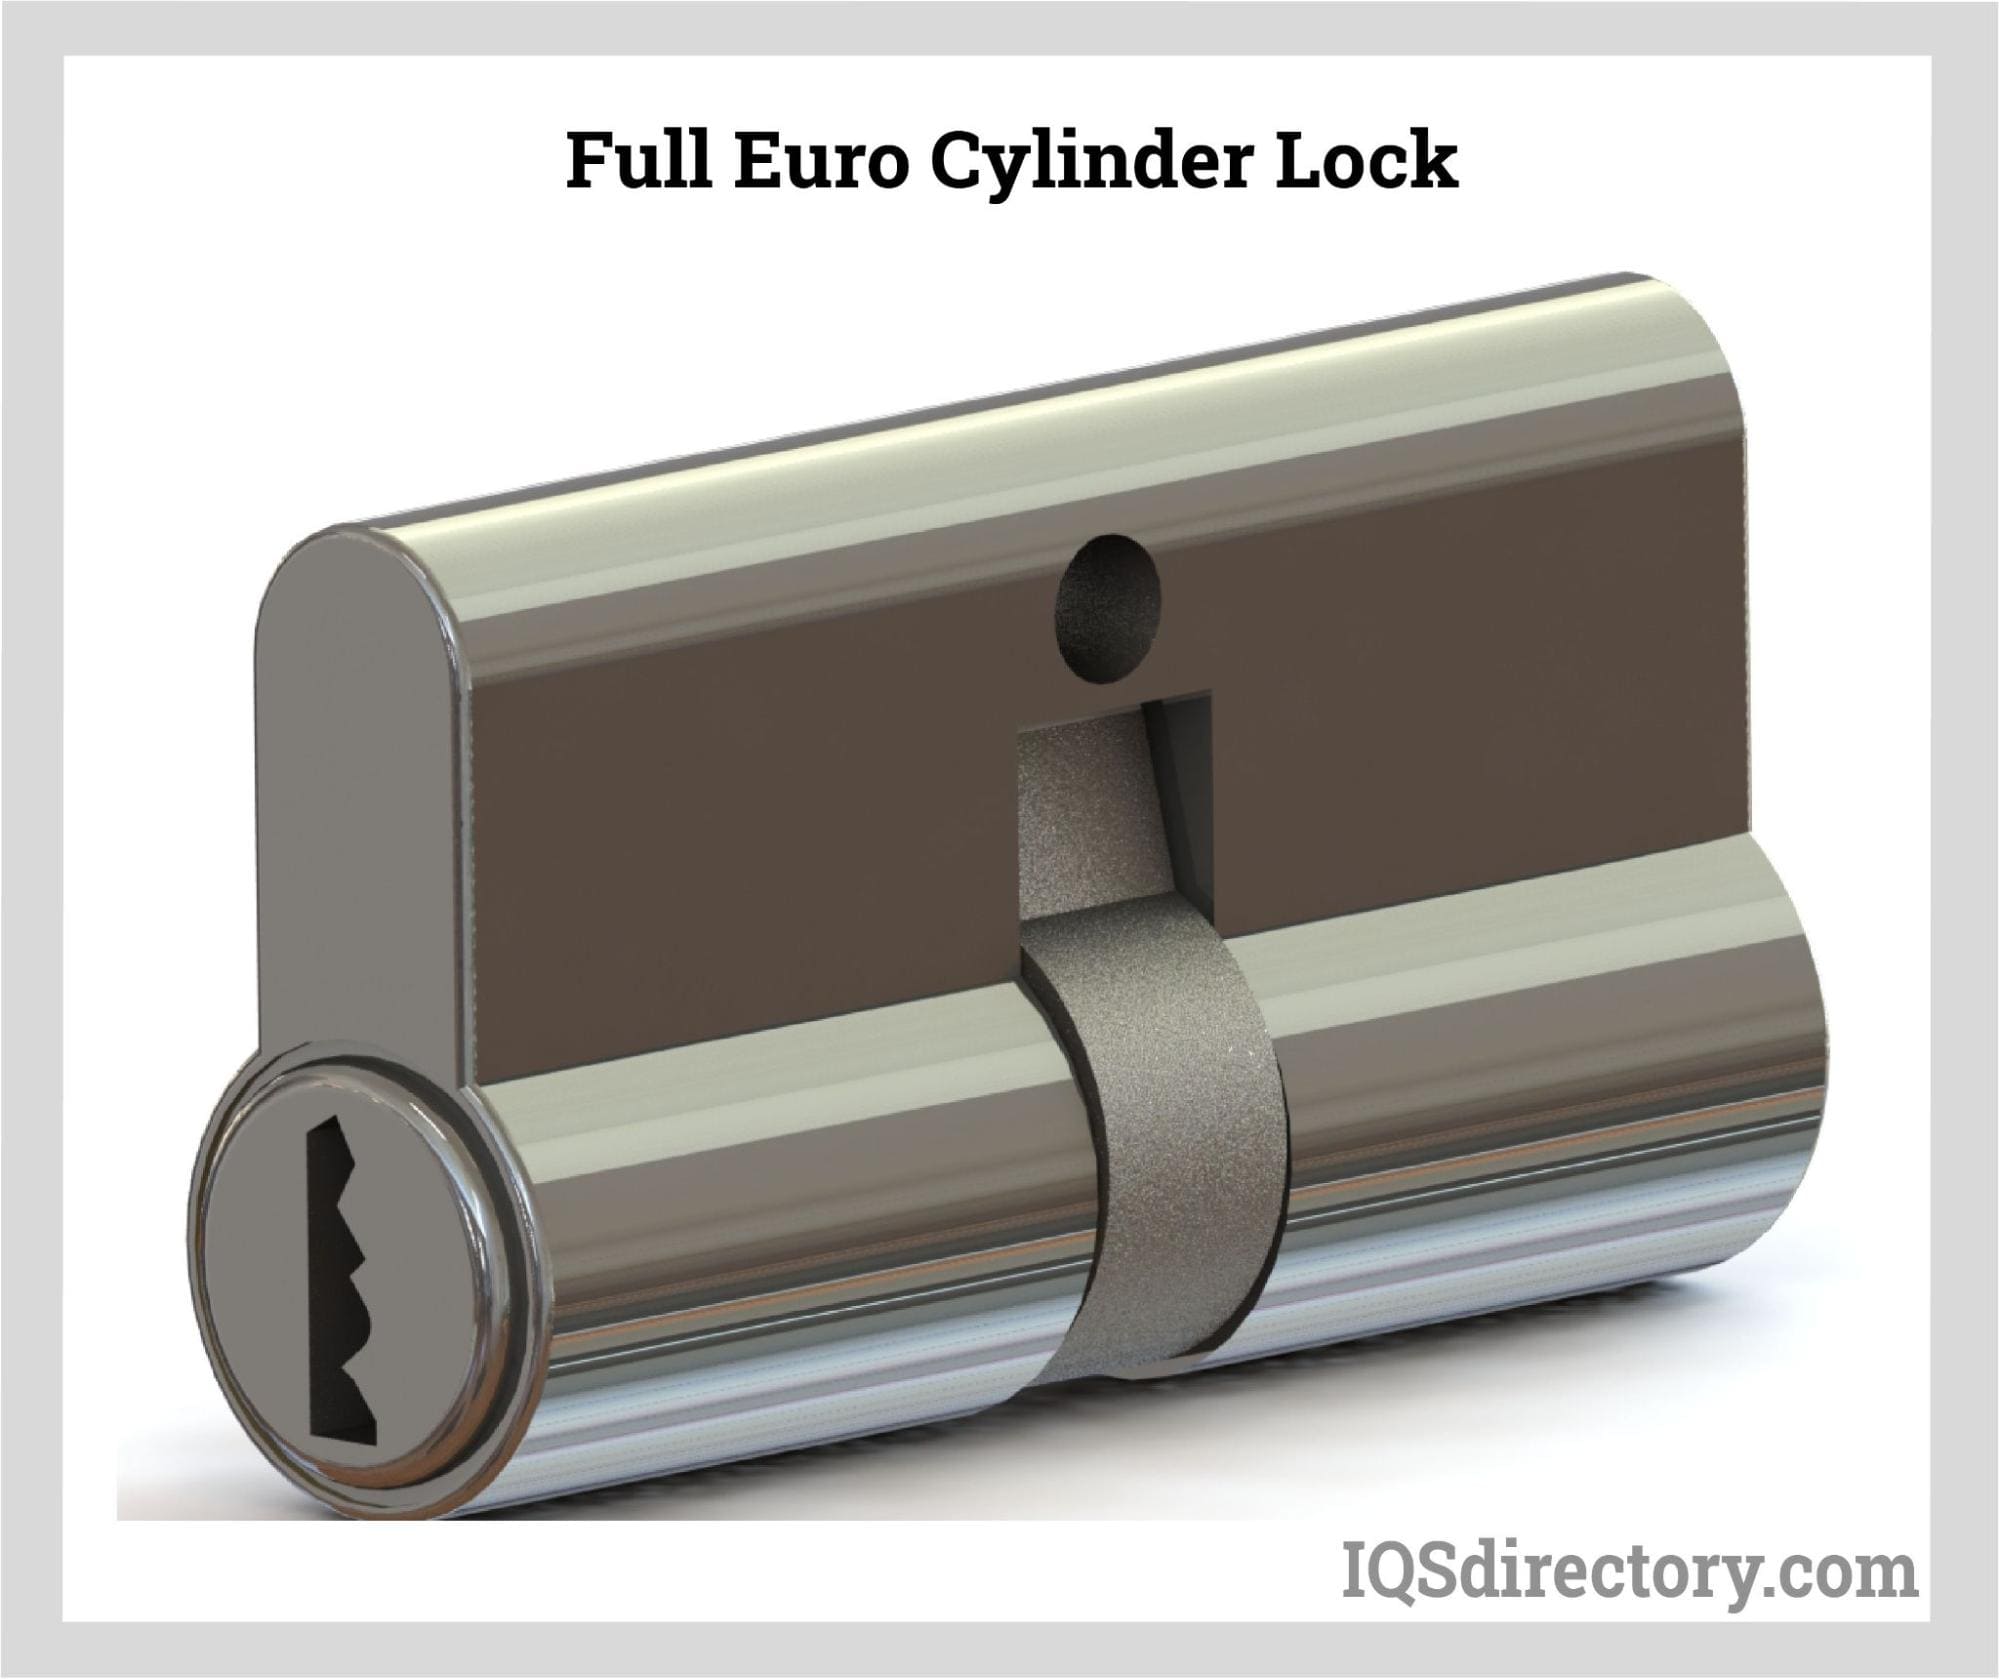 Full Euro Cylinder Lock